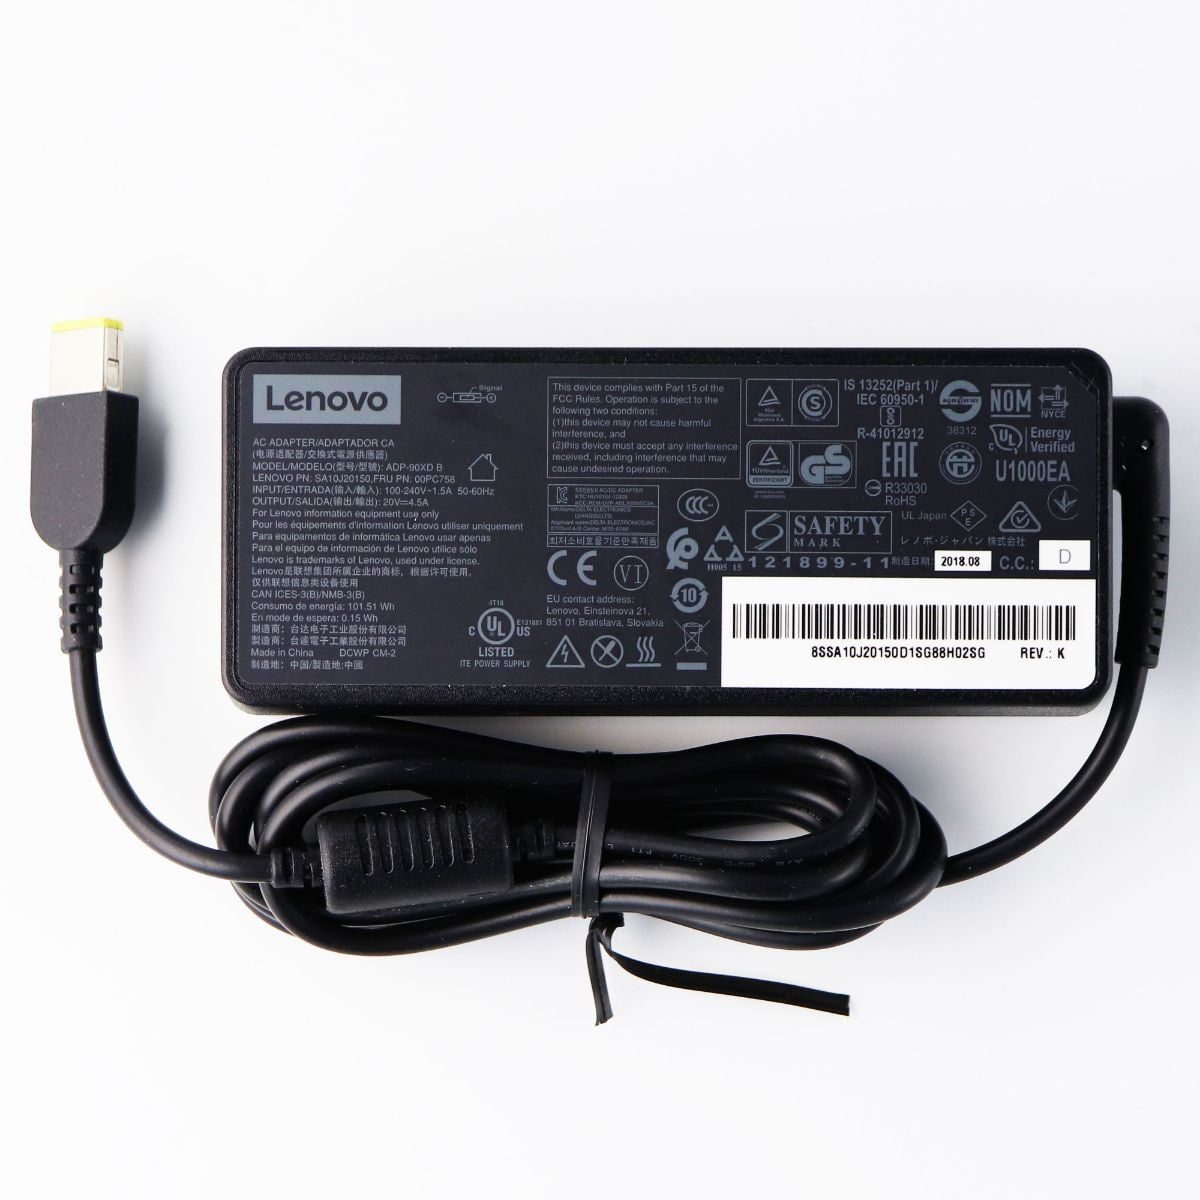 Oem Lenovo Replacement Laptop Charger Power Supply Adapter Adp 90xd B Refurbished Walmart Com Walmart Com